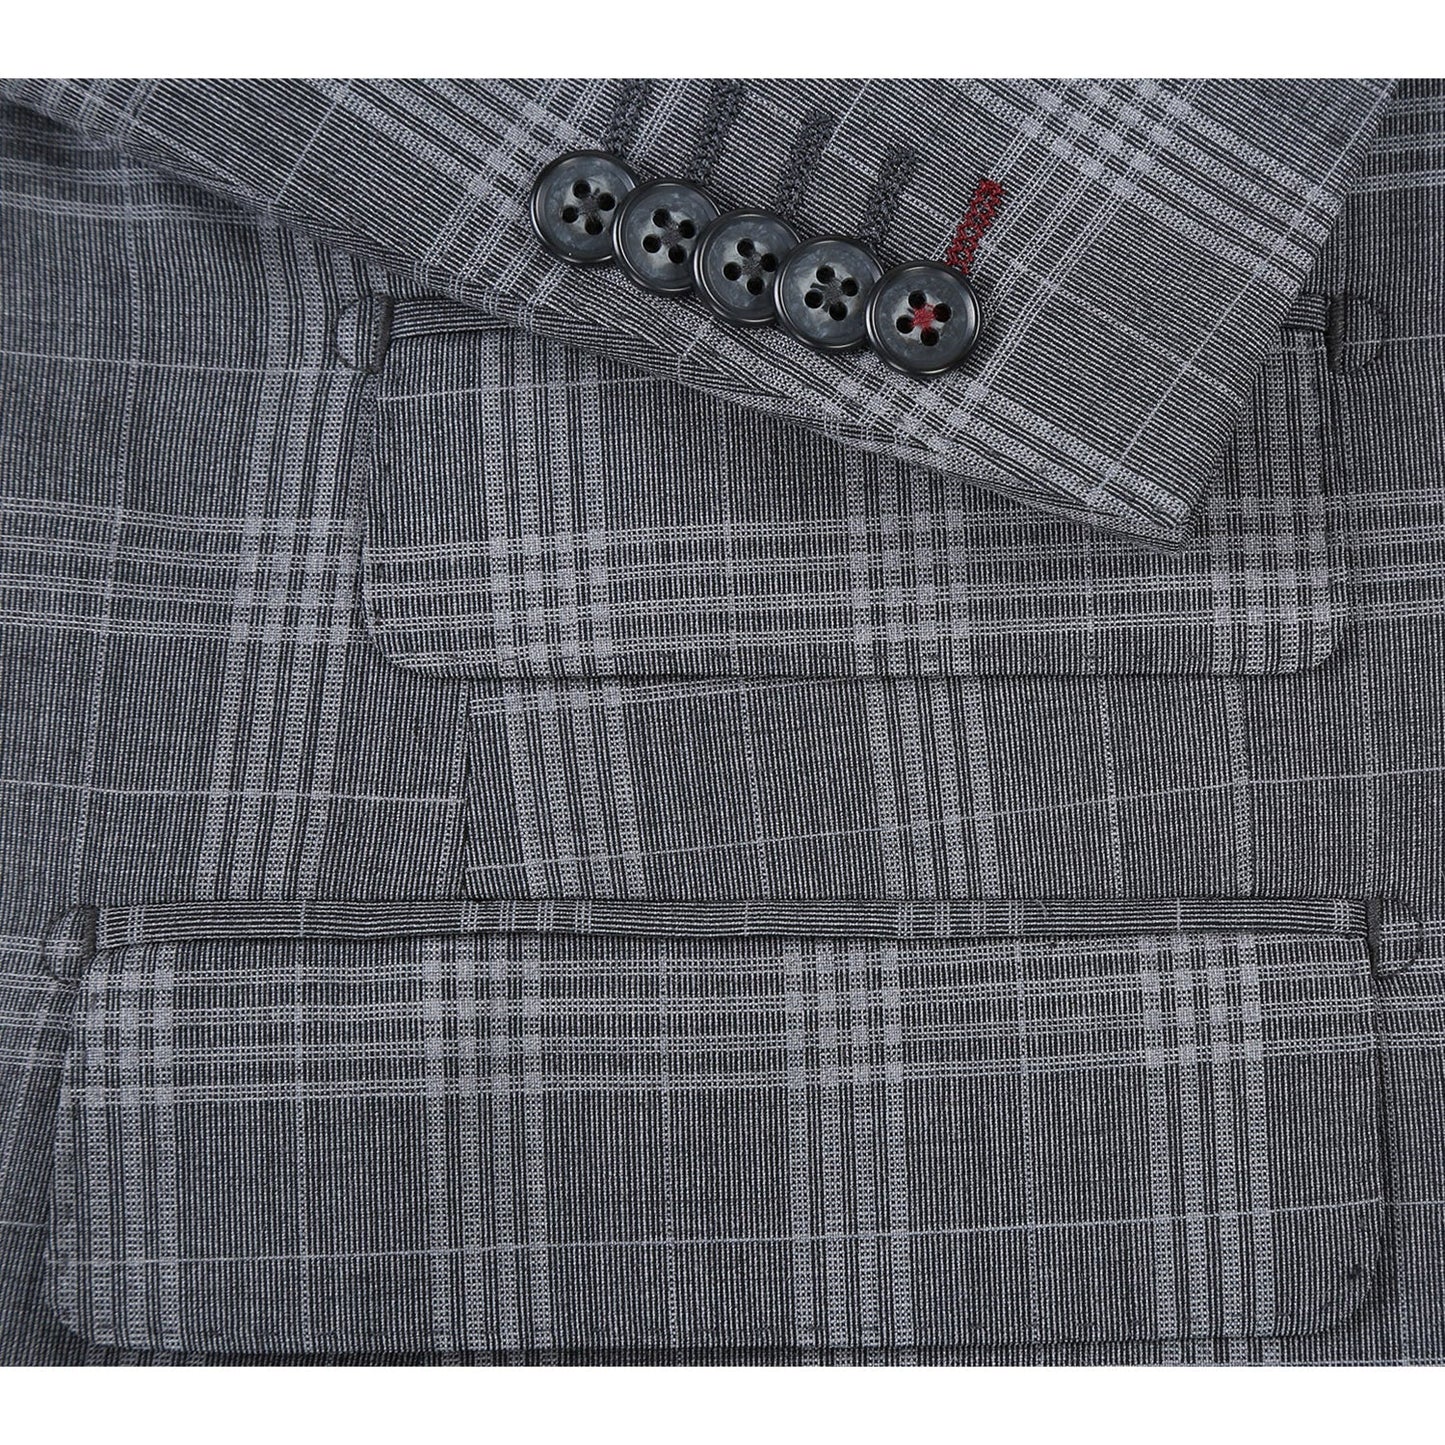 EL72-58-093 Slim Fit English Laundry Gray Check Peak Lapel Wool Blend Suit